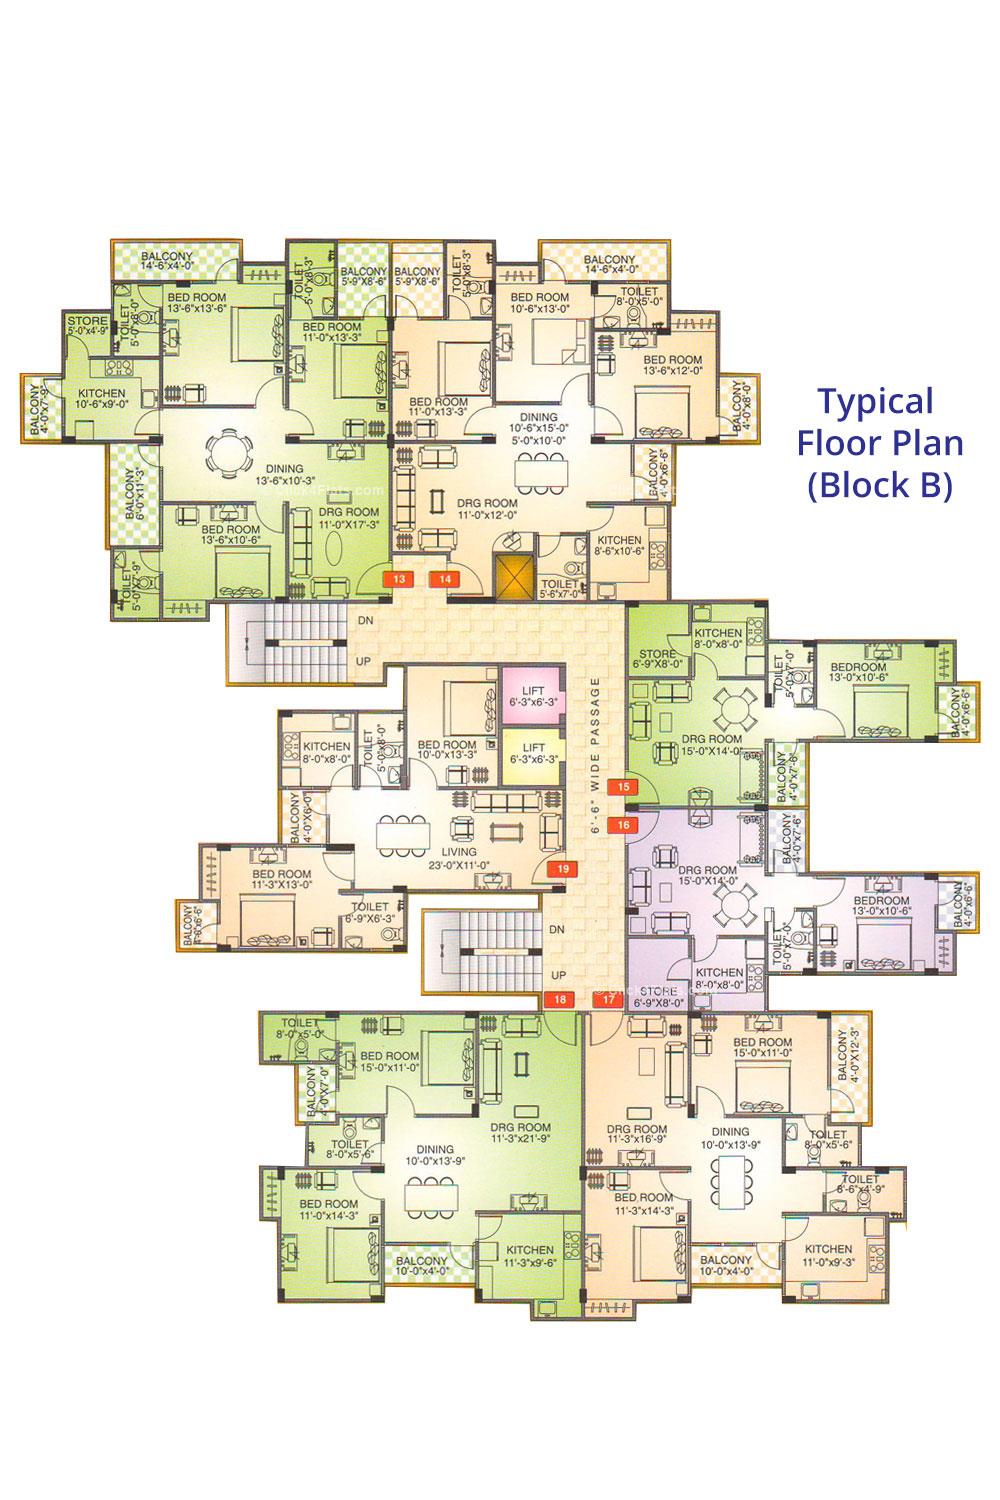 Shivgyan Enclave Typical Floor Plan (Block C)